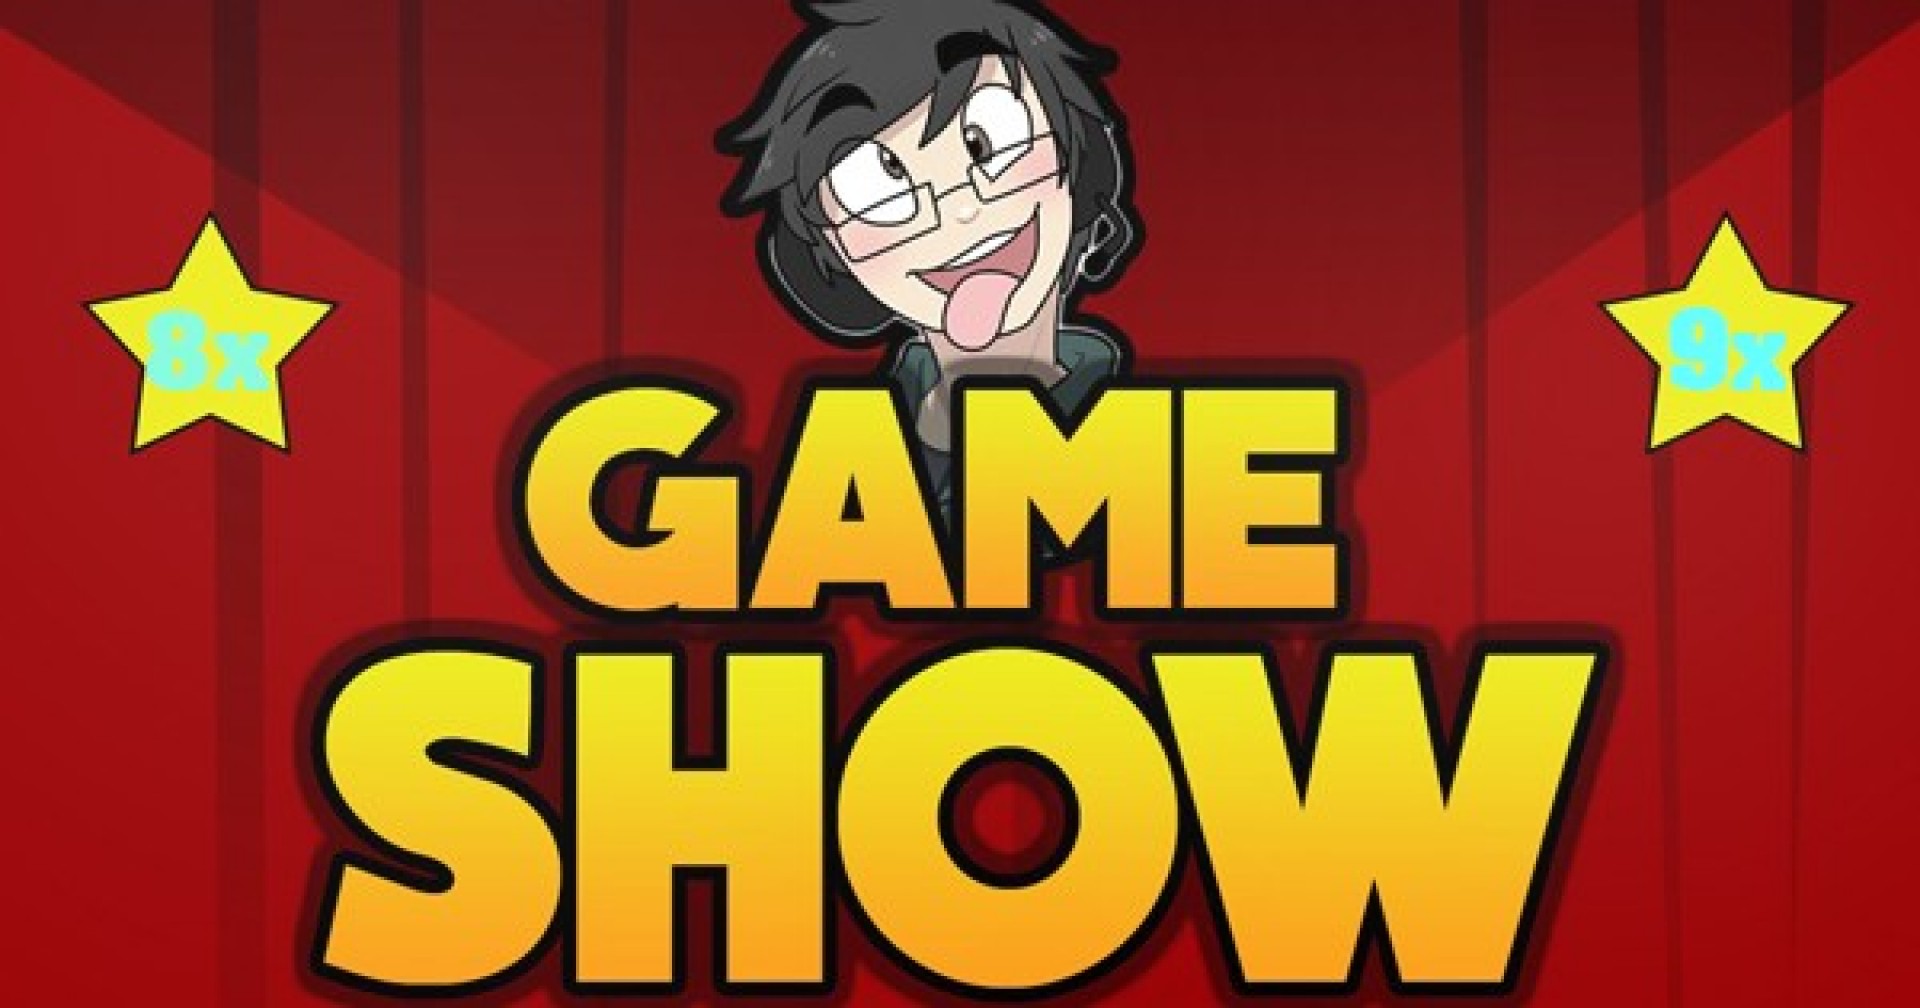 Www game show. Game show. The show игра. Game show логотип. Гейм шоу заставка.